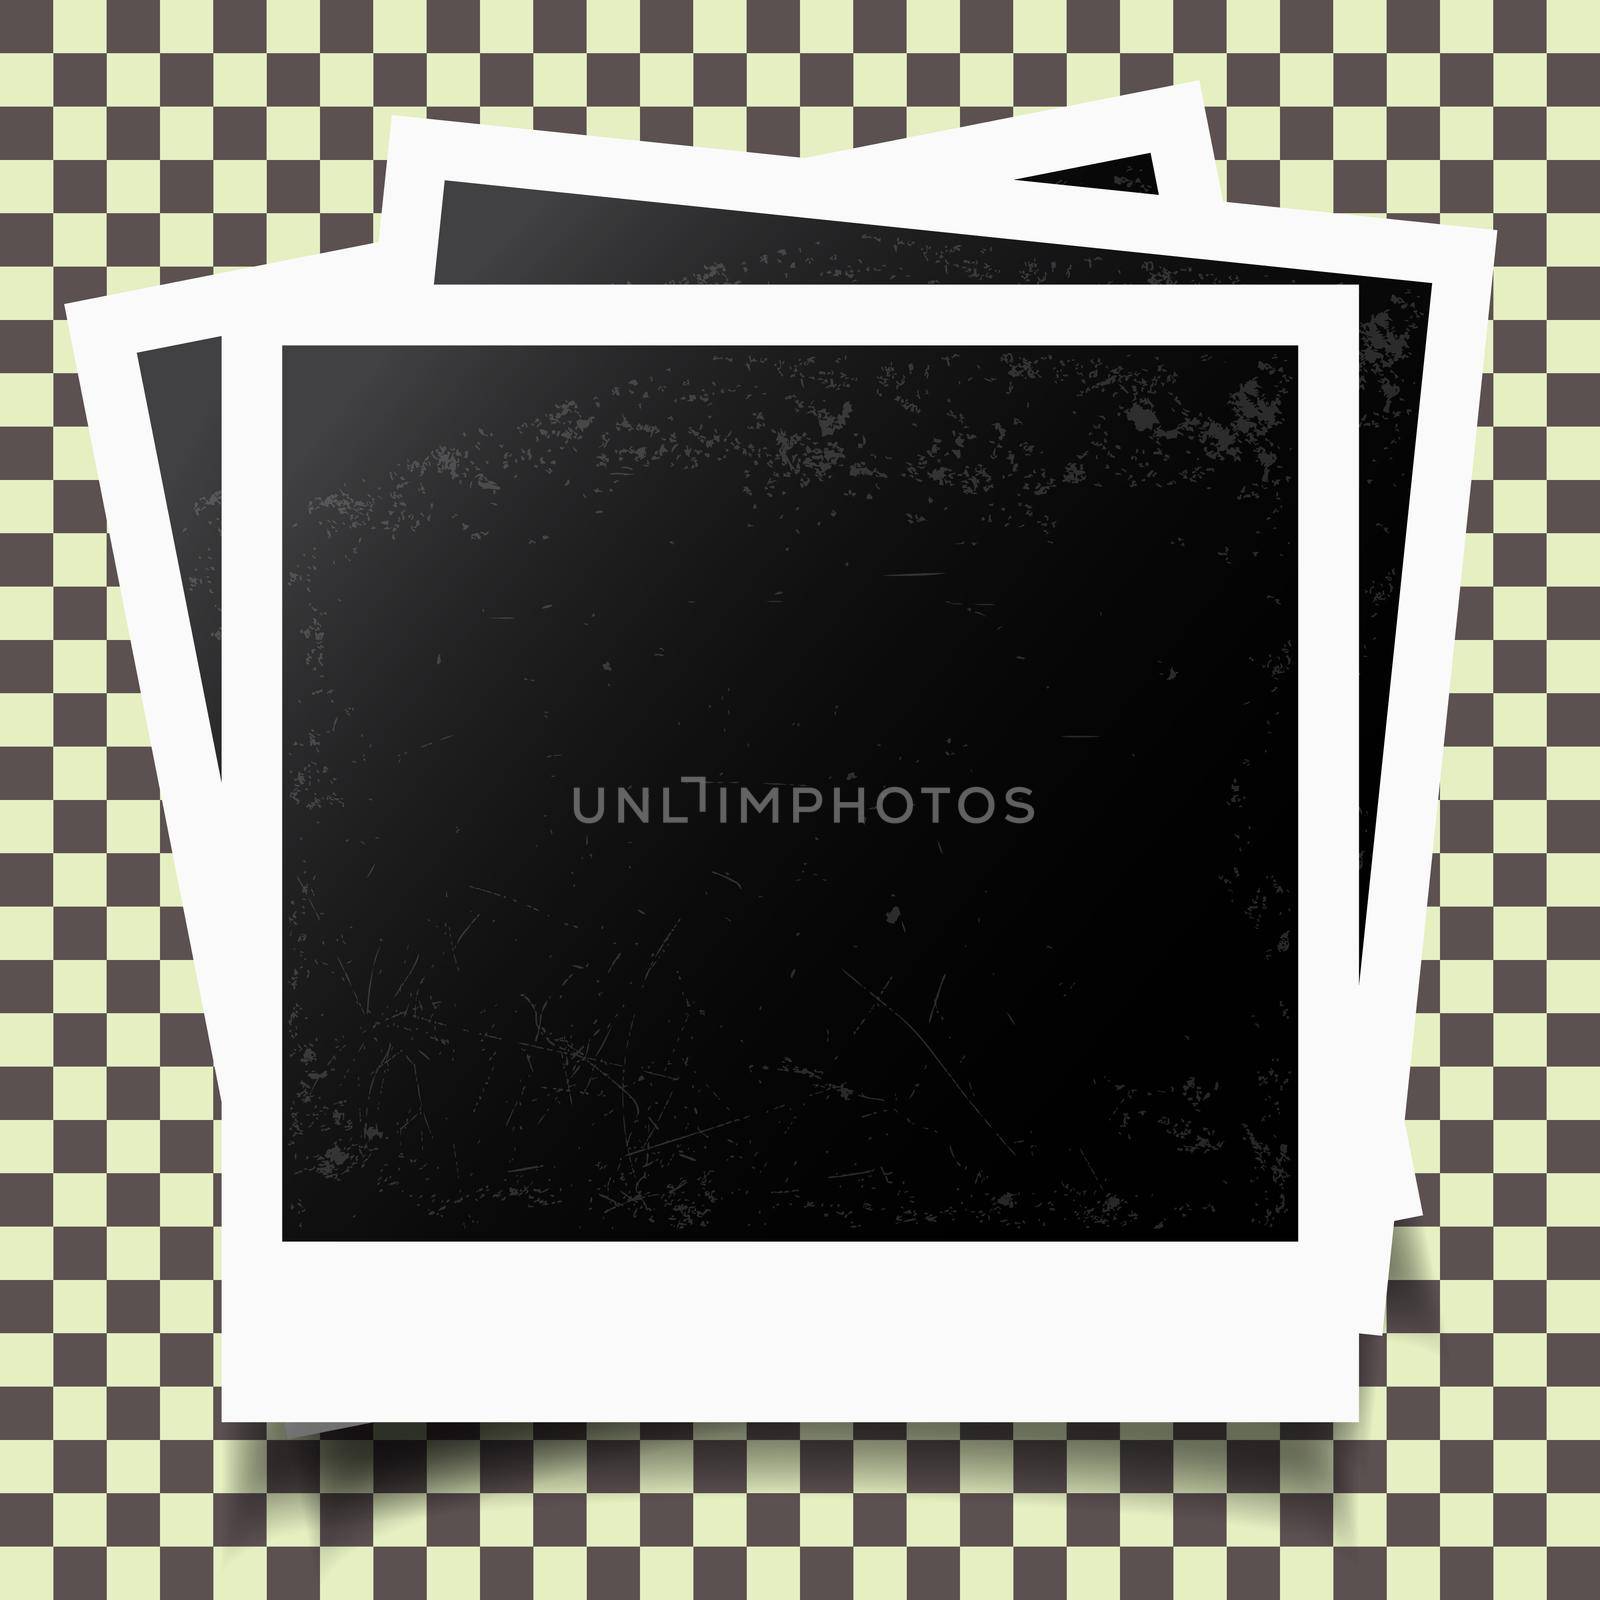 Retro photo frames on checkered background. Vector illustration.